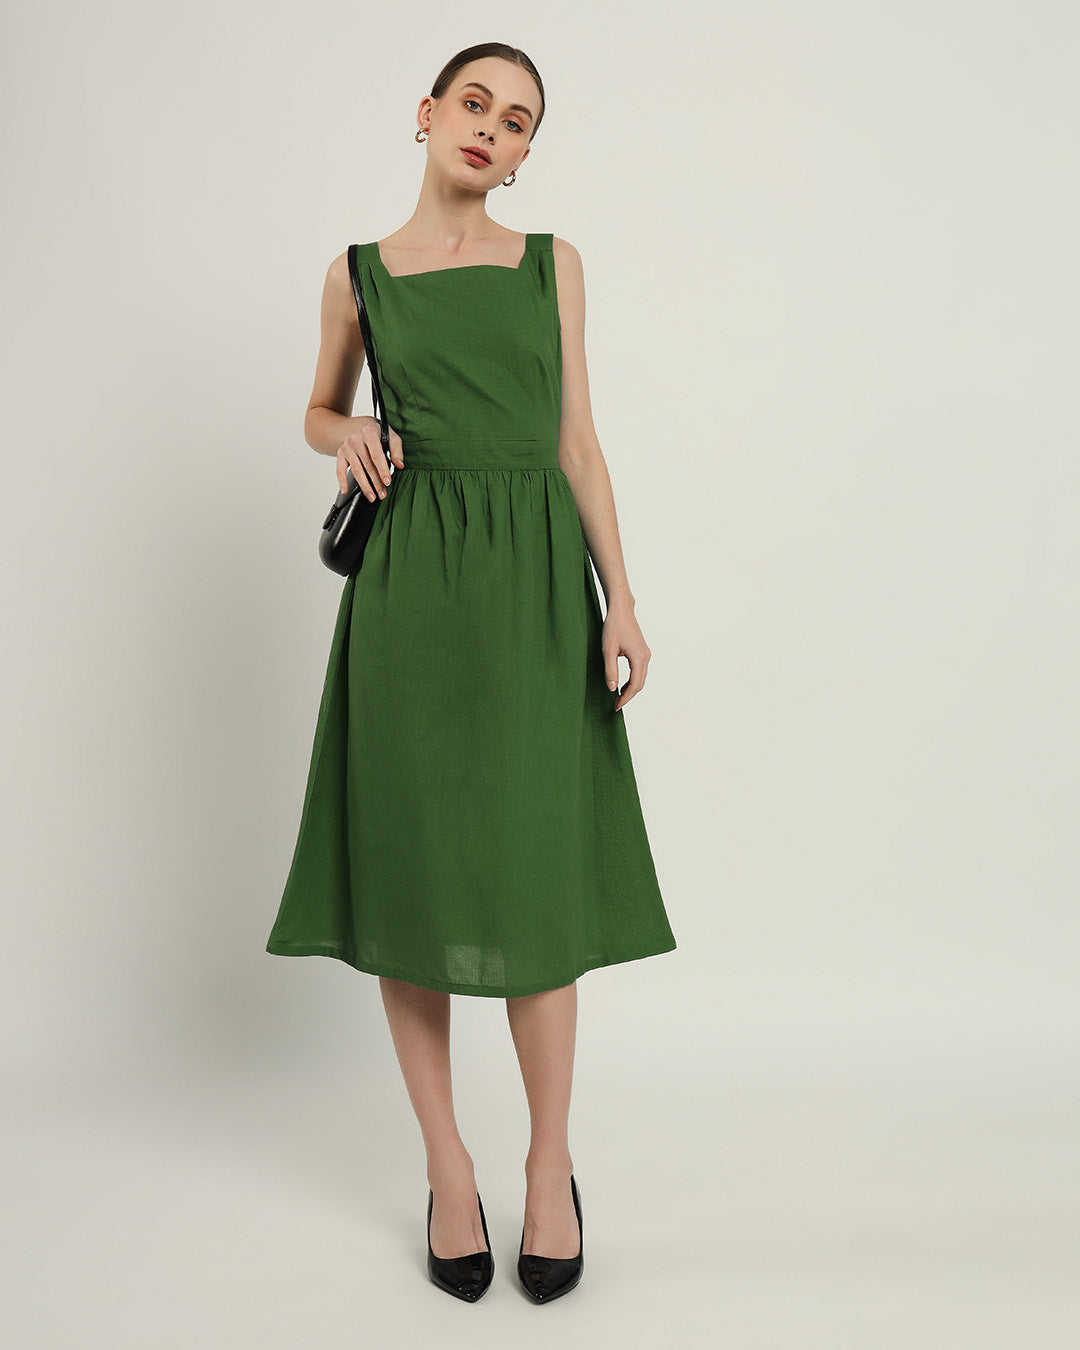 The Mihara Emerald Cotton Dress